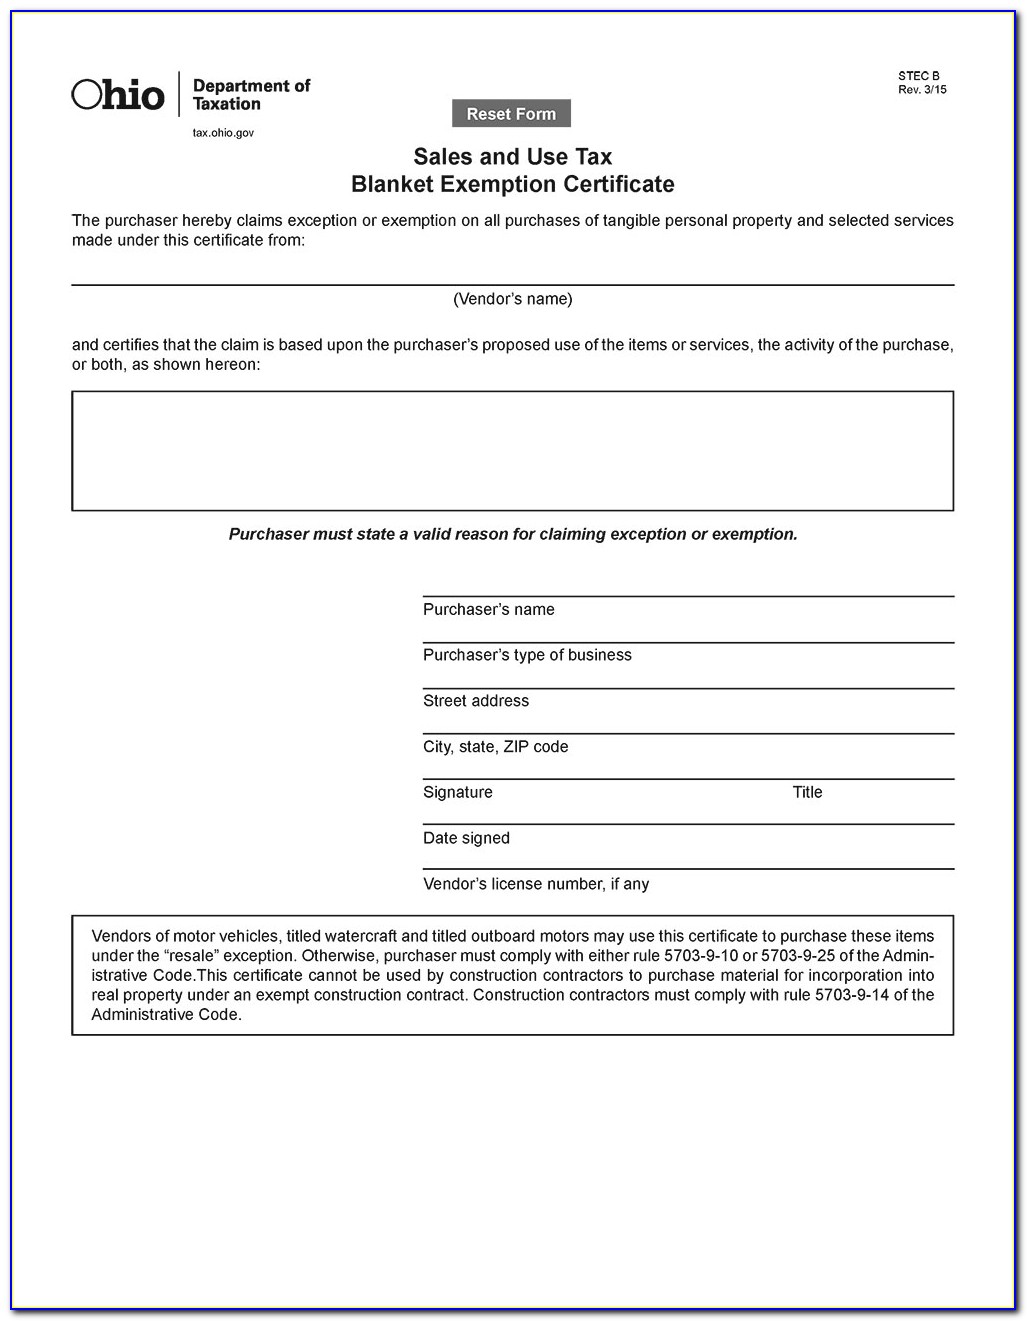 Ohio Blanket Tax Exemption Certificate